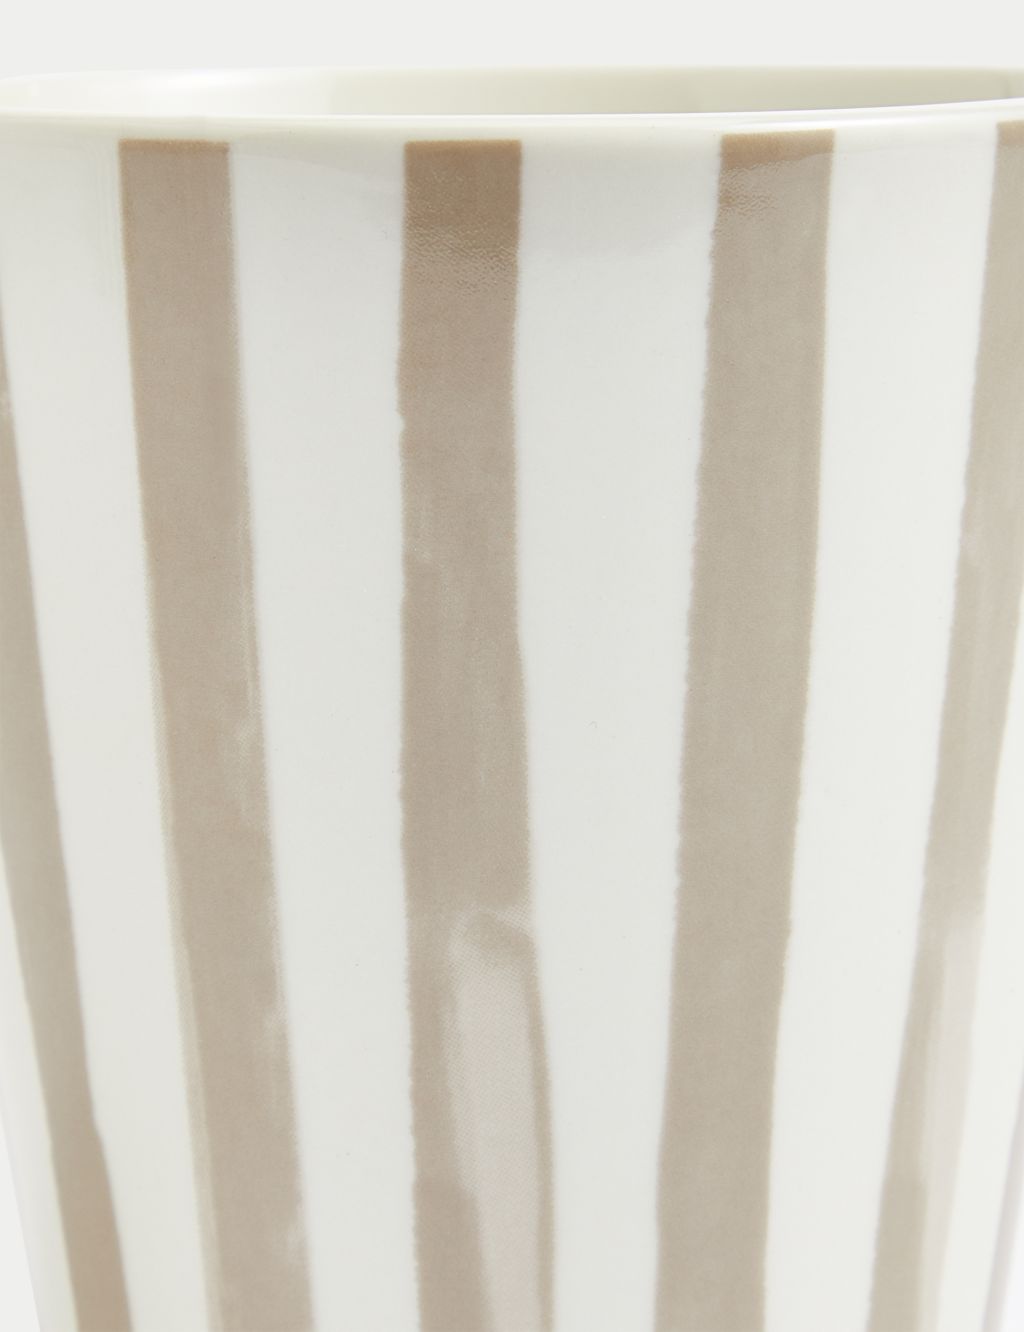 Set of 4 Linear Striped Mugs image 4